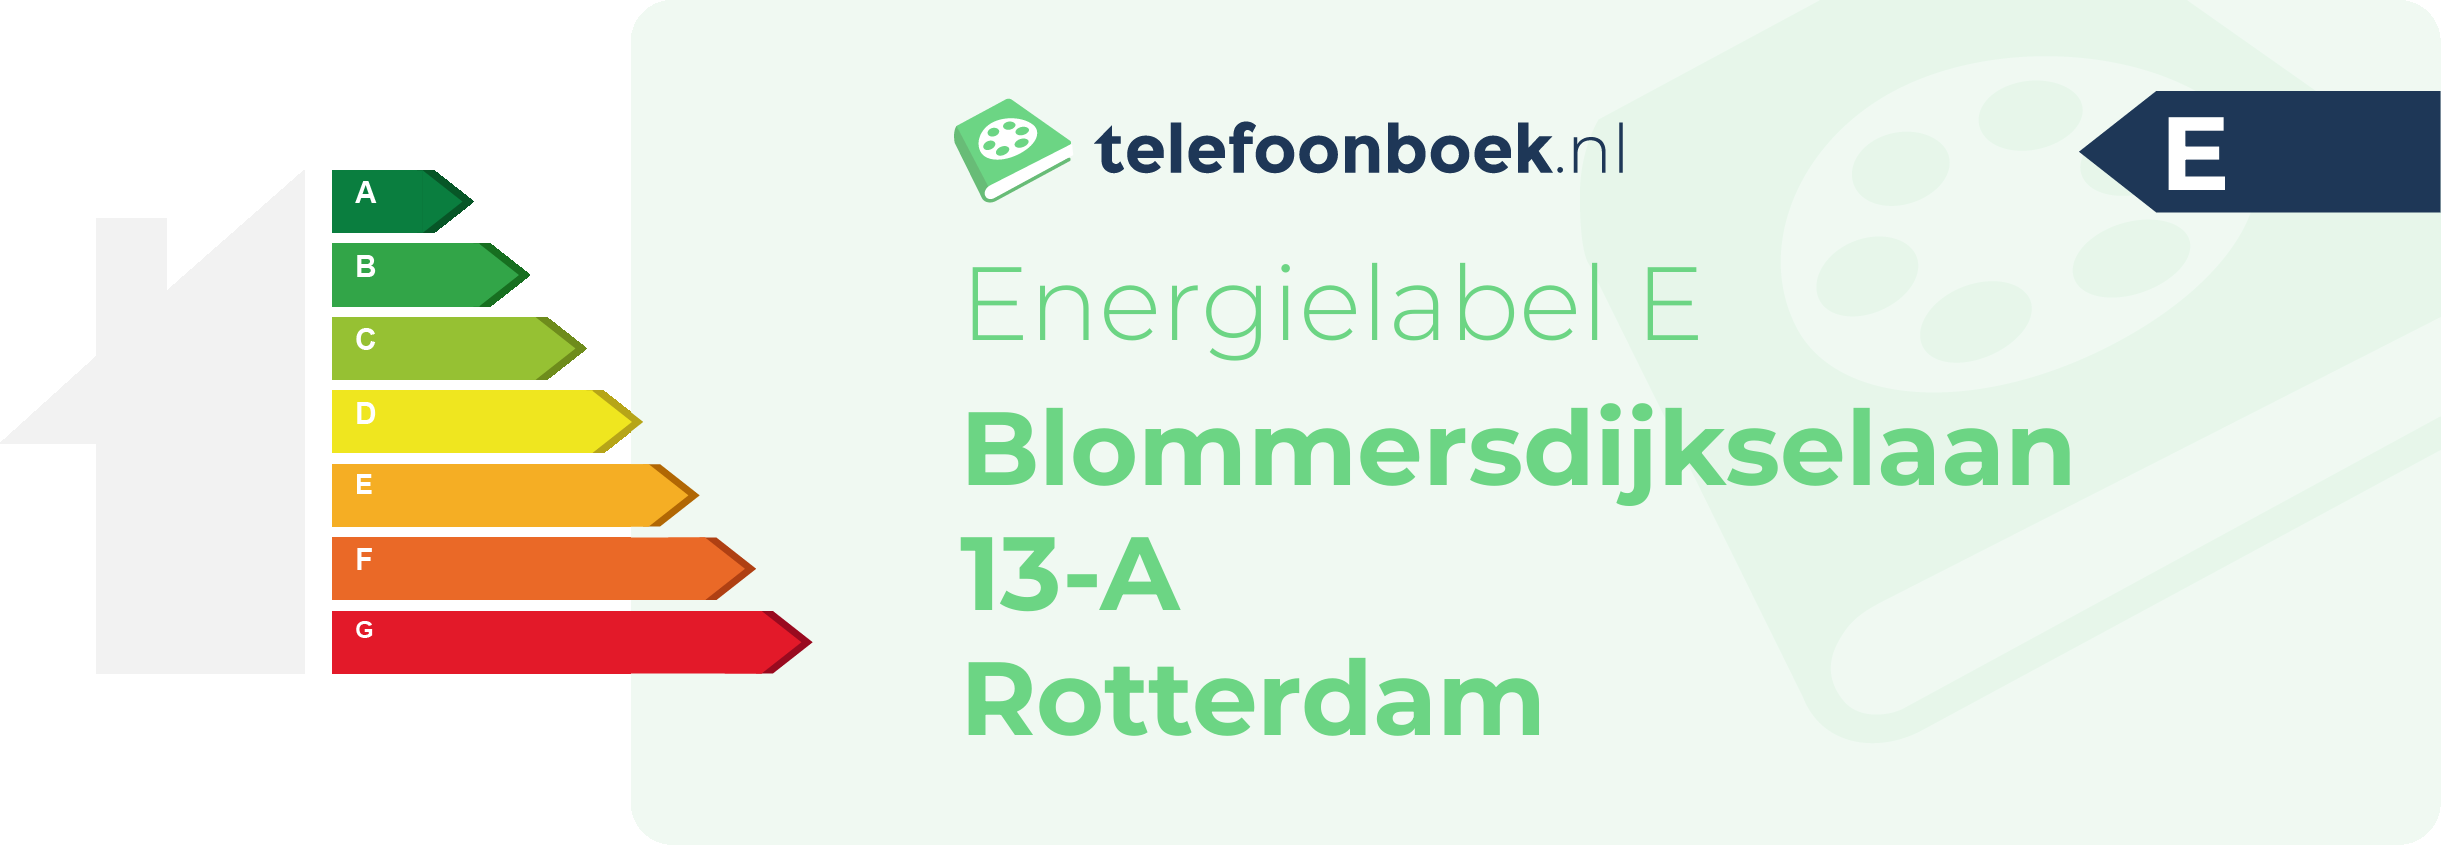 Energielabel Blommersdijkselaan 13-A Rotterdam